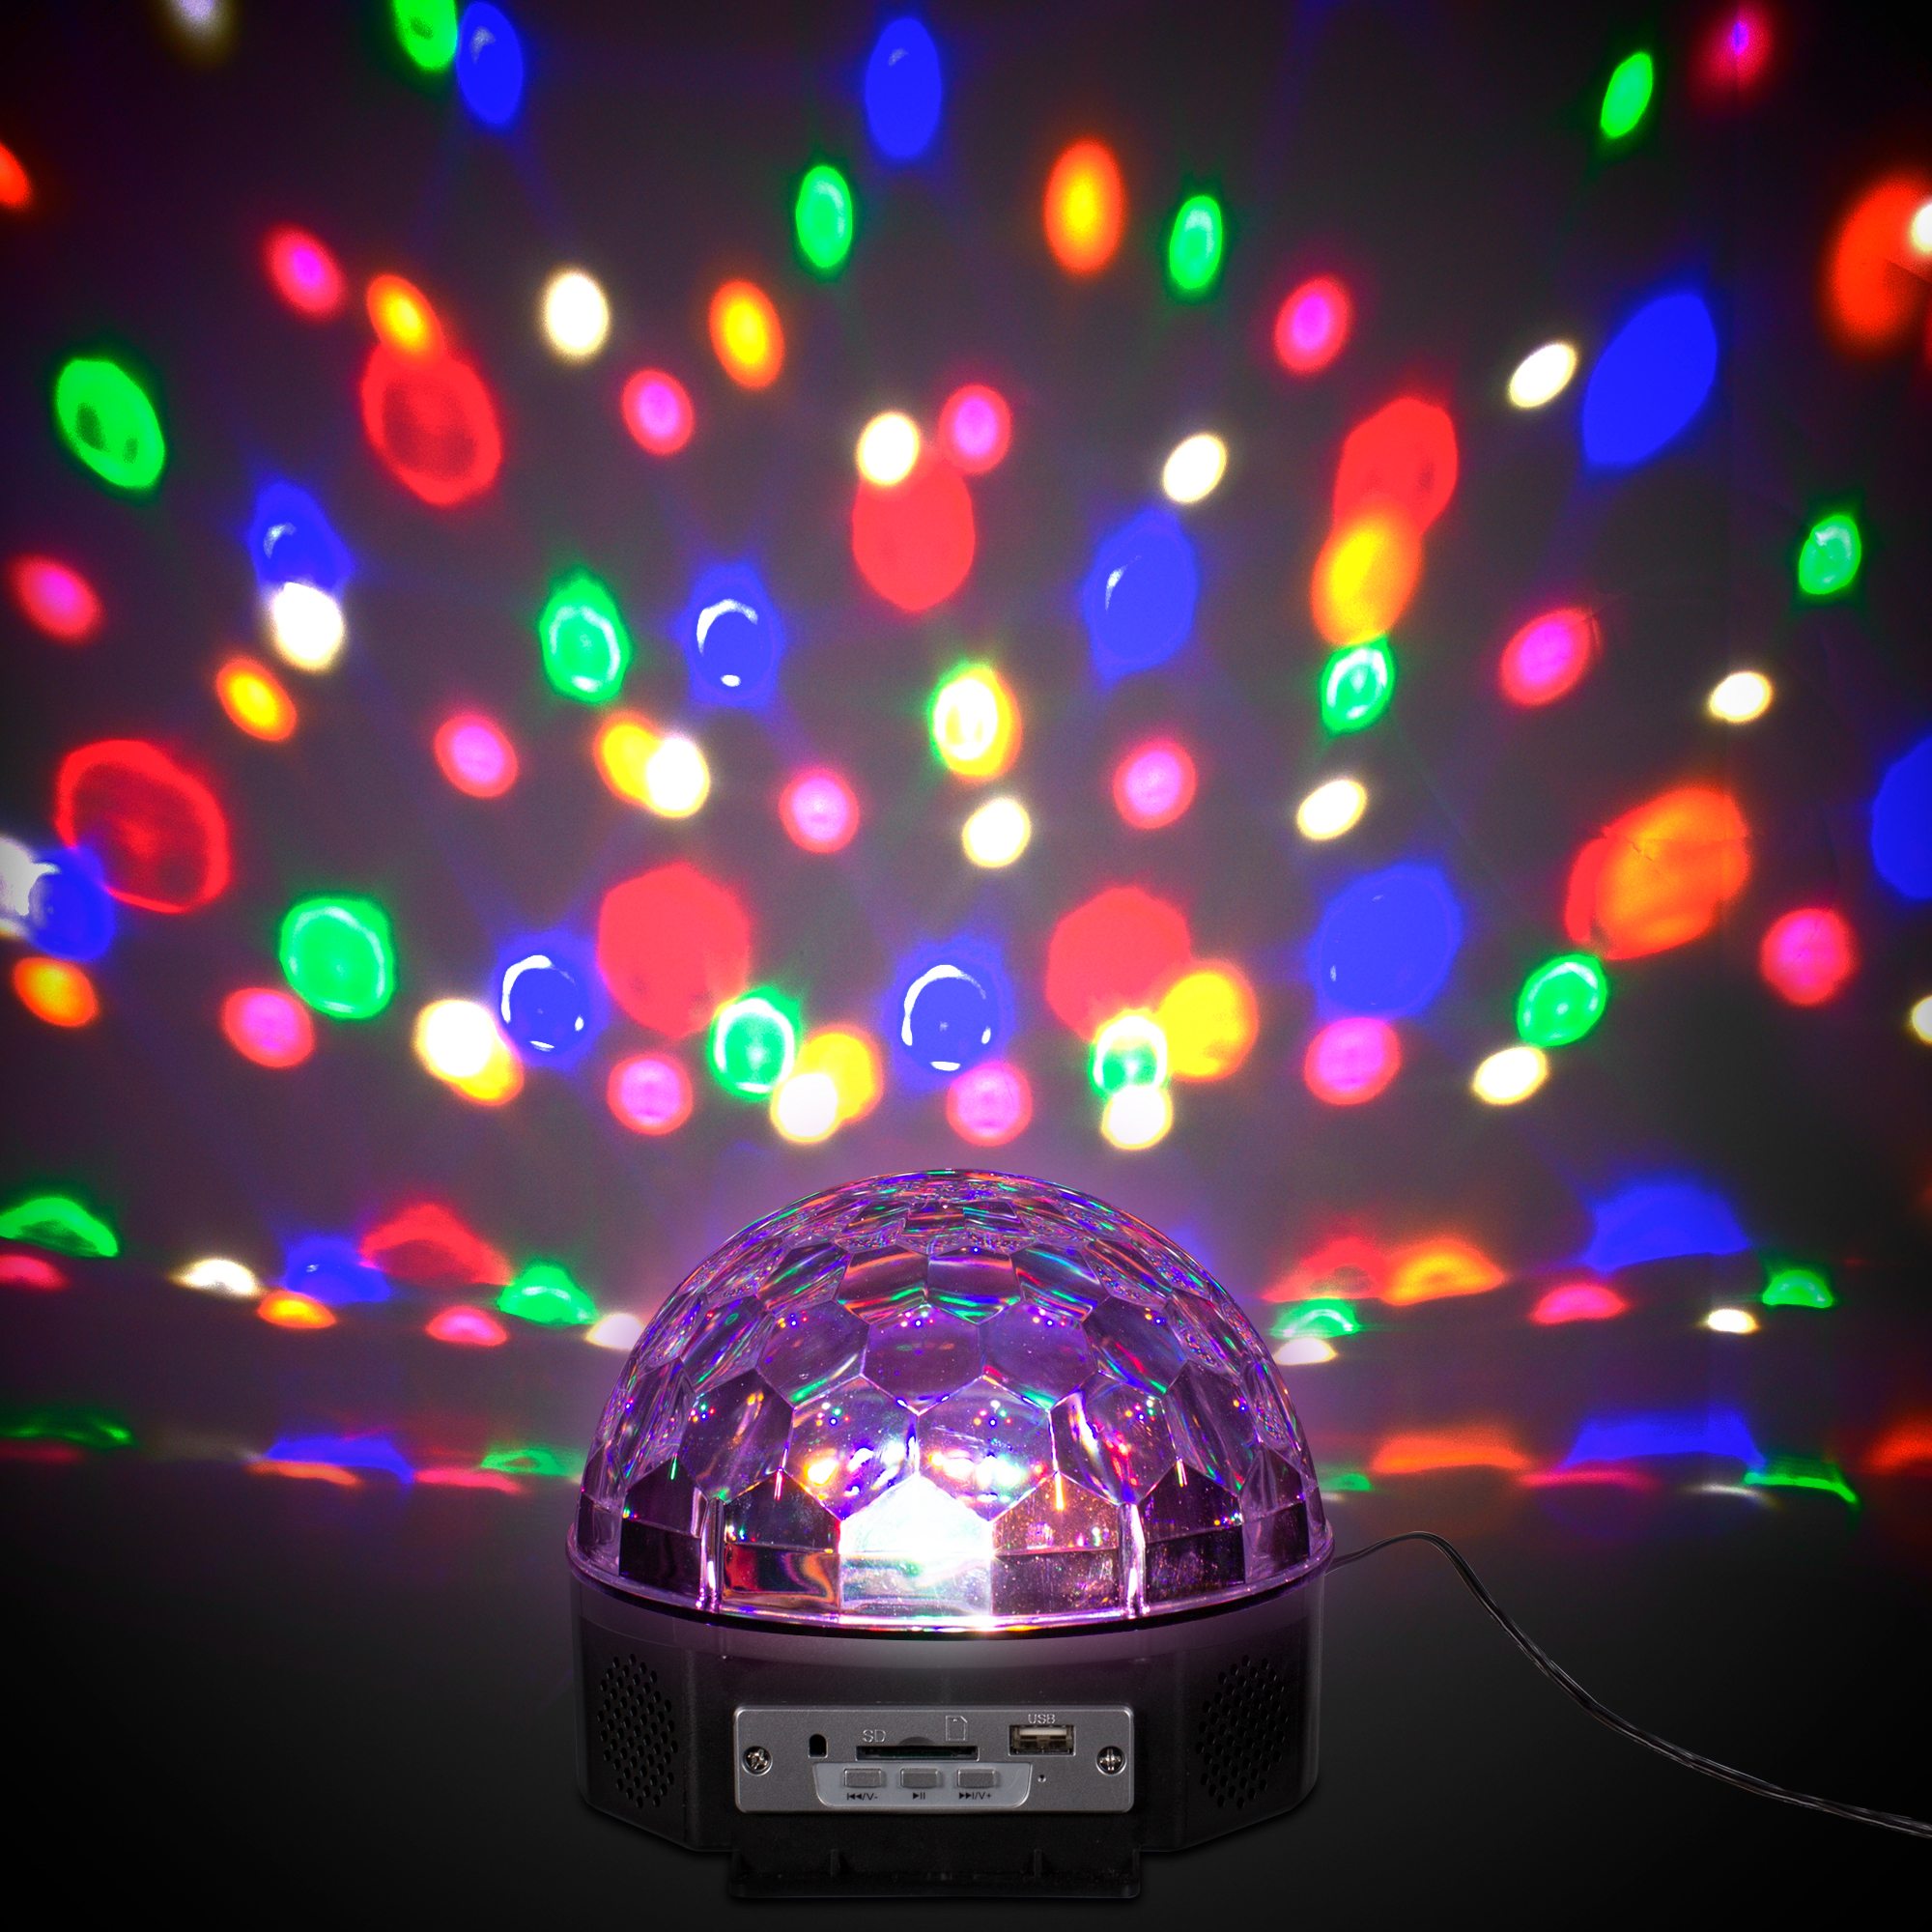 LED DJ Lighting Effects Machine by Windy City Novelties